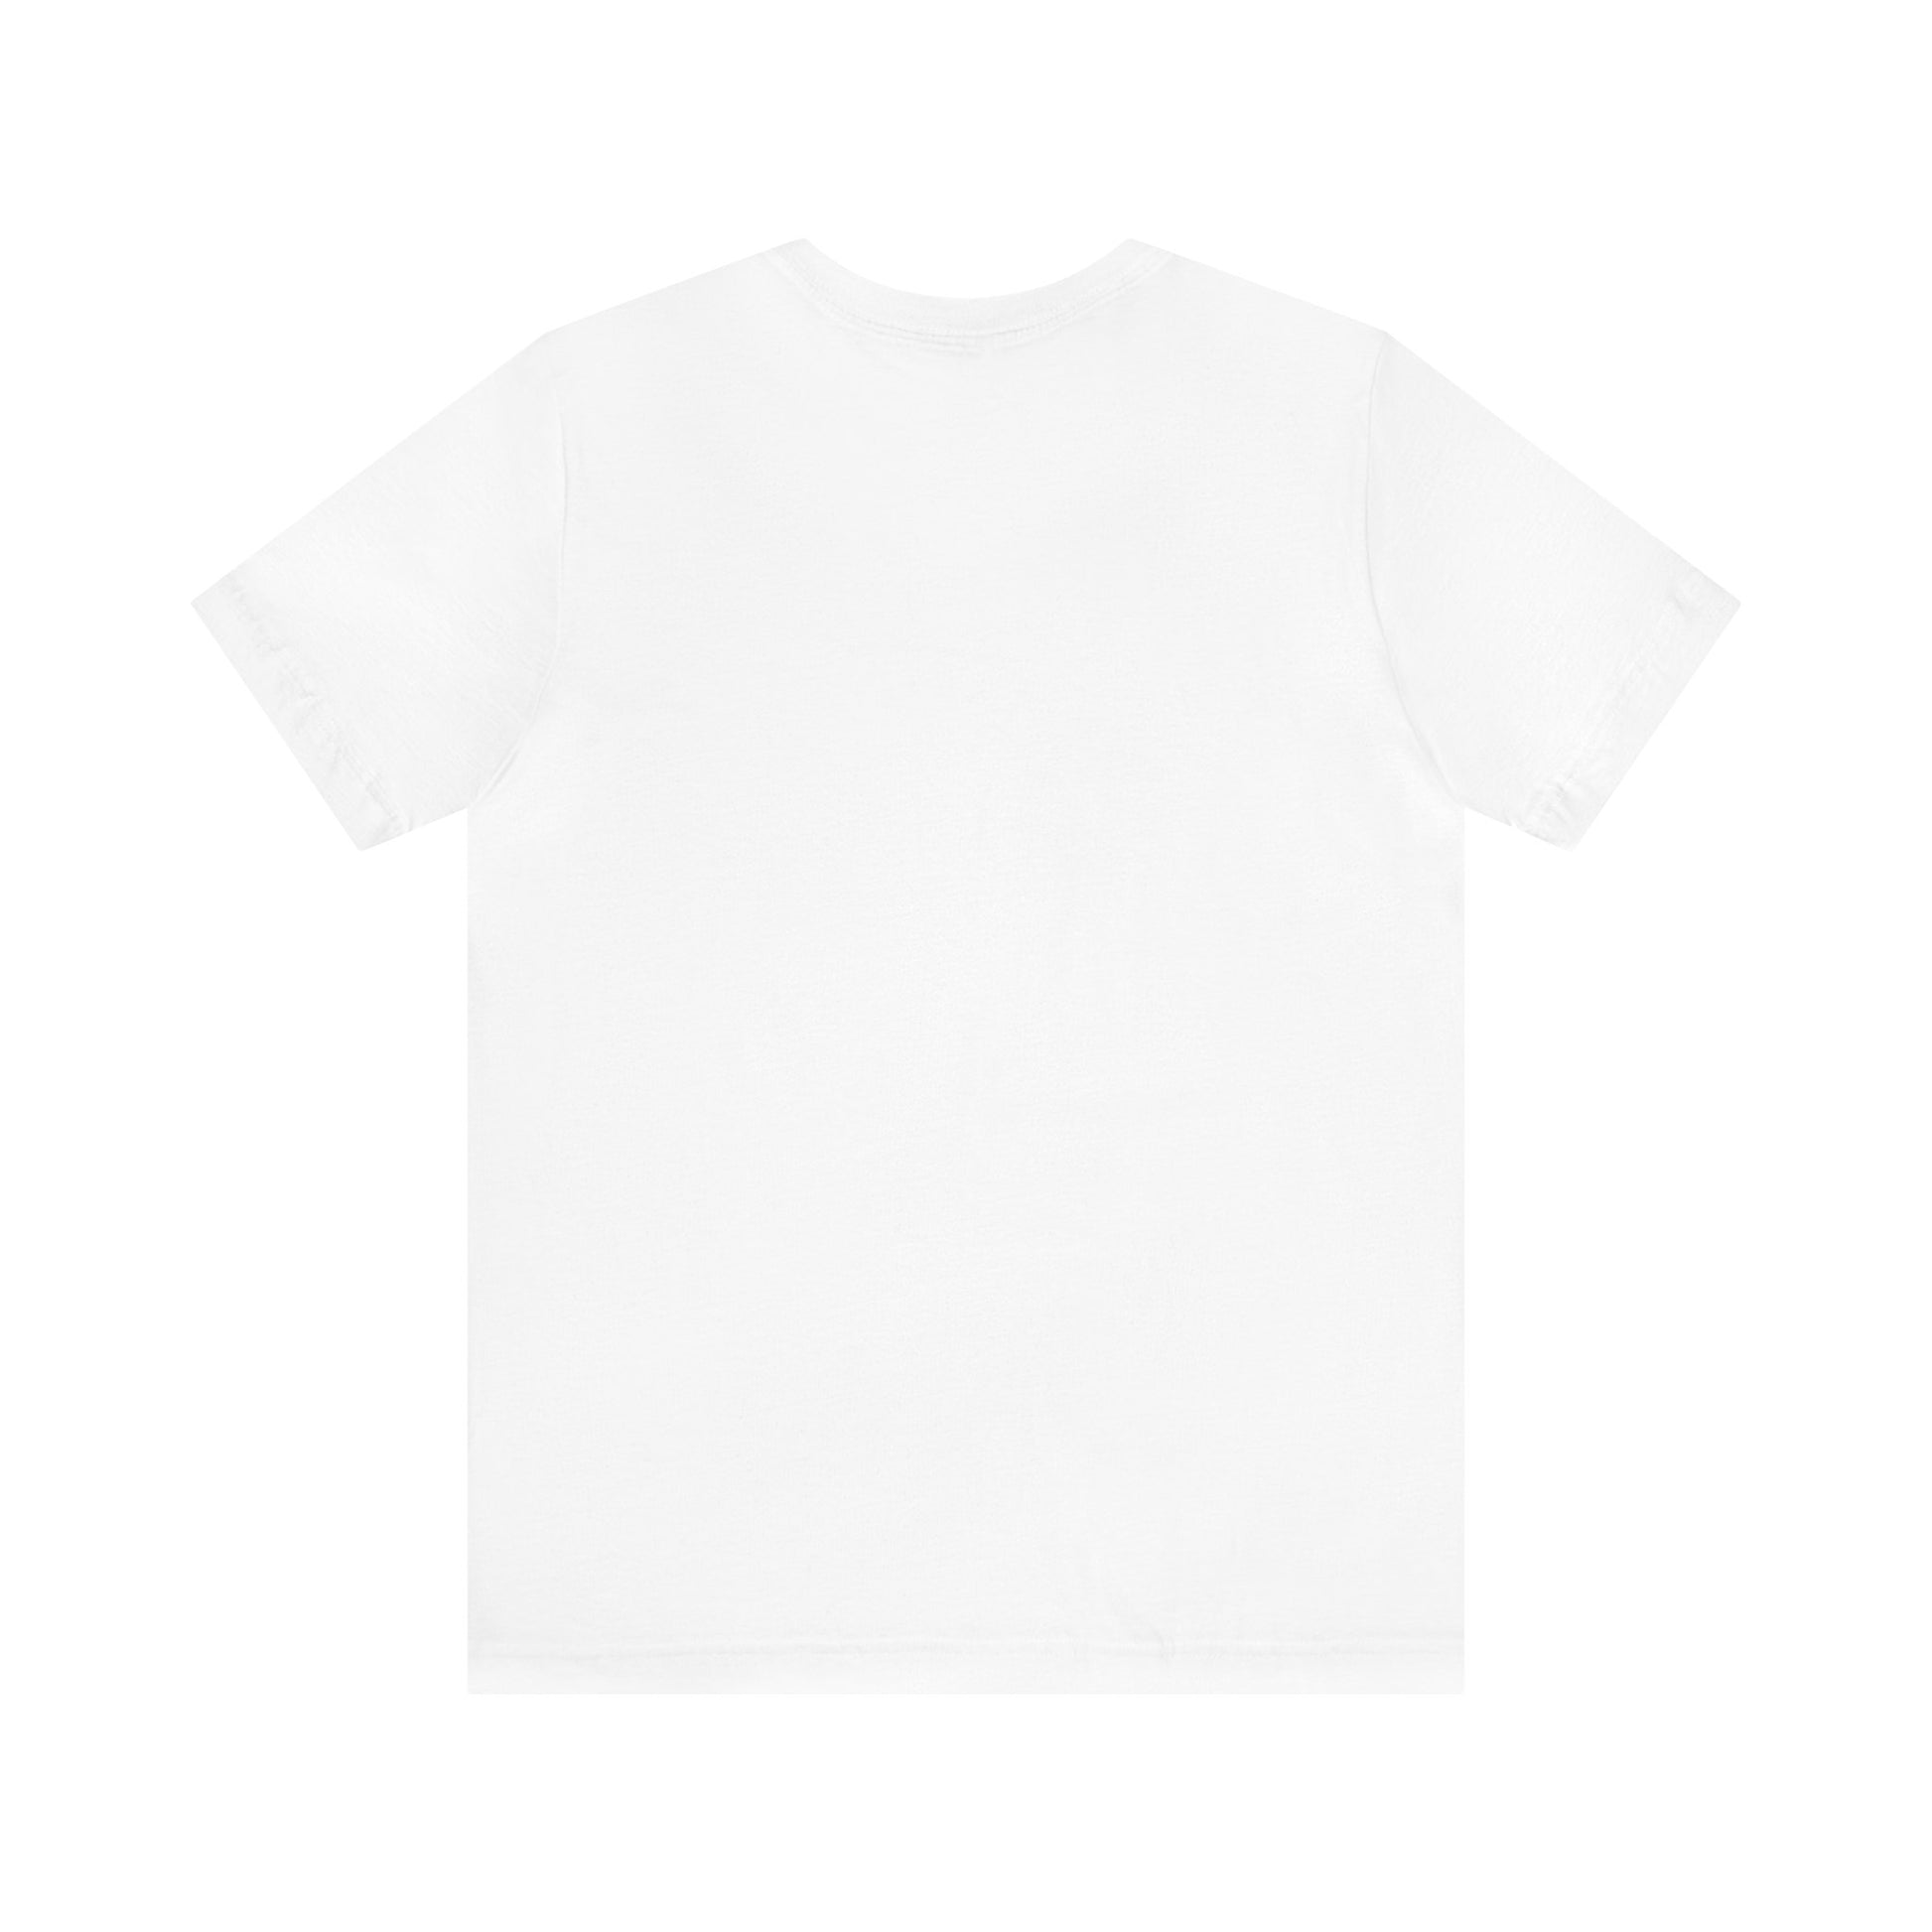 Prystine ASD T-Shirt